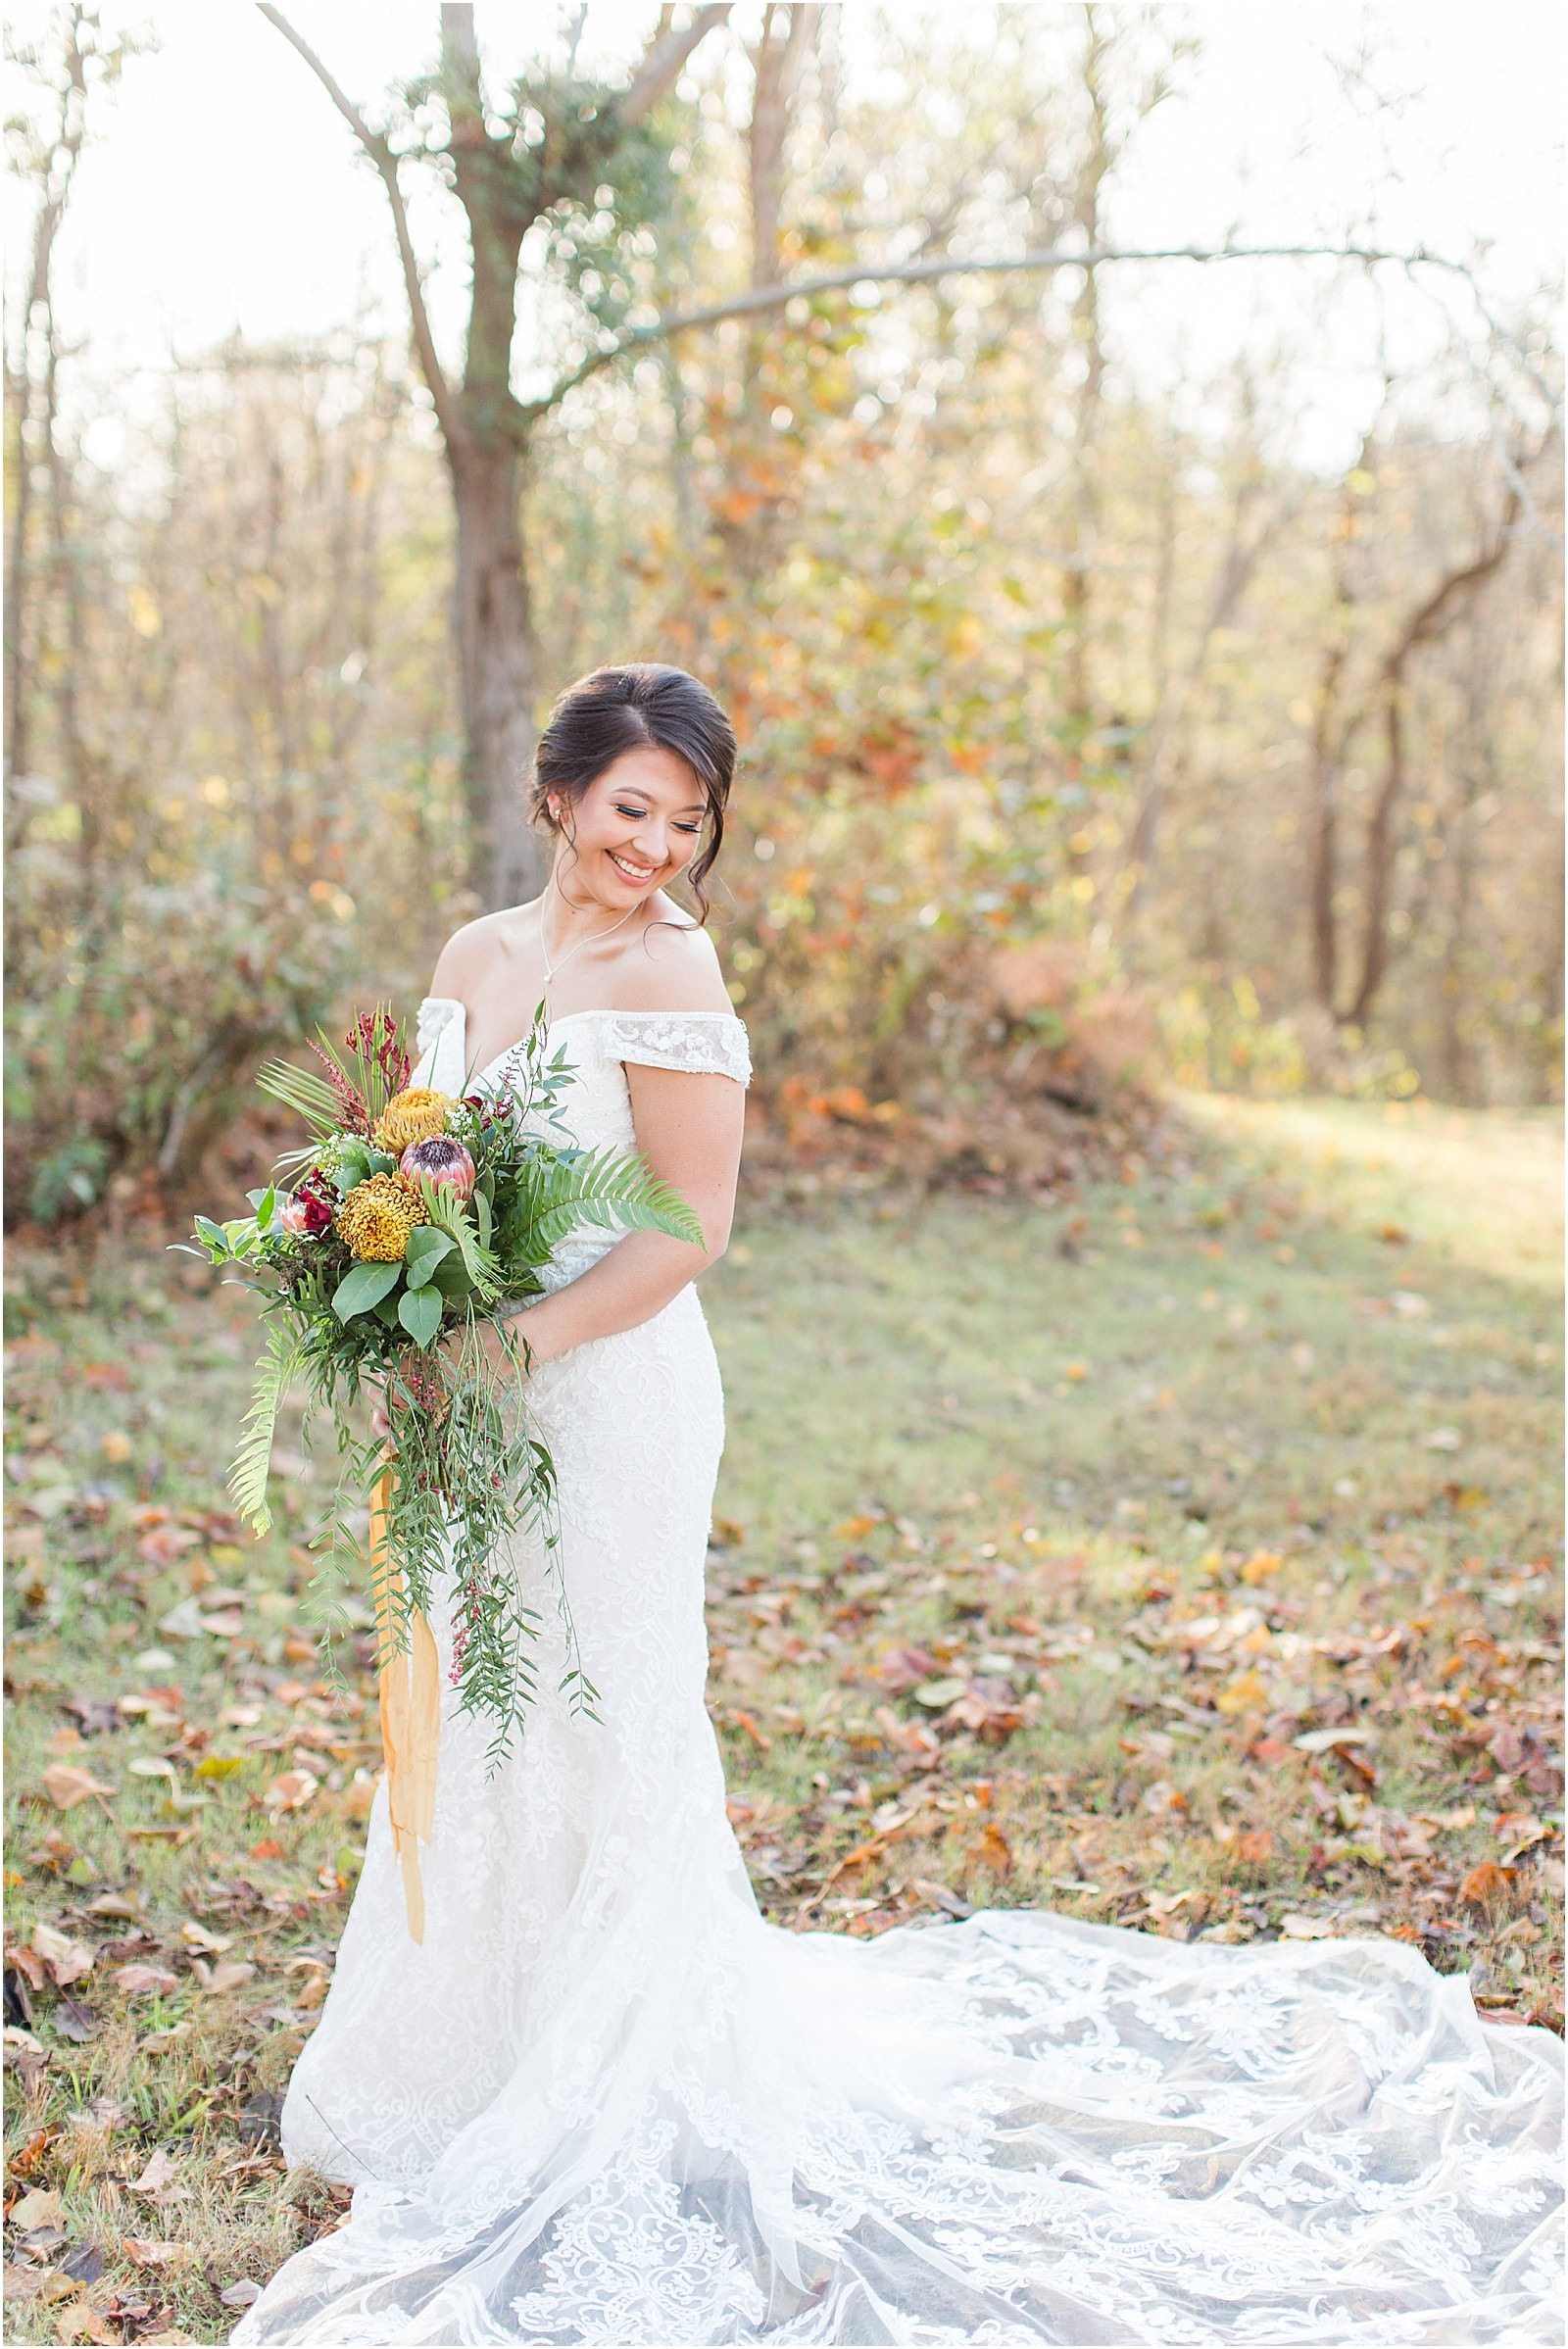 Walker and Alyssa's intimate fall wedding in Southern Indiana. | Wedding Photography | The Corner House Wedding | Southern Indiana Wedding | #fallwedding #intimatewedding | 048.jpg